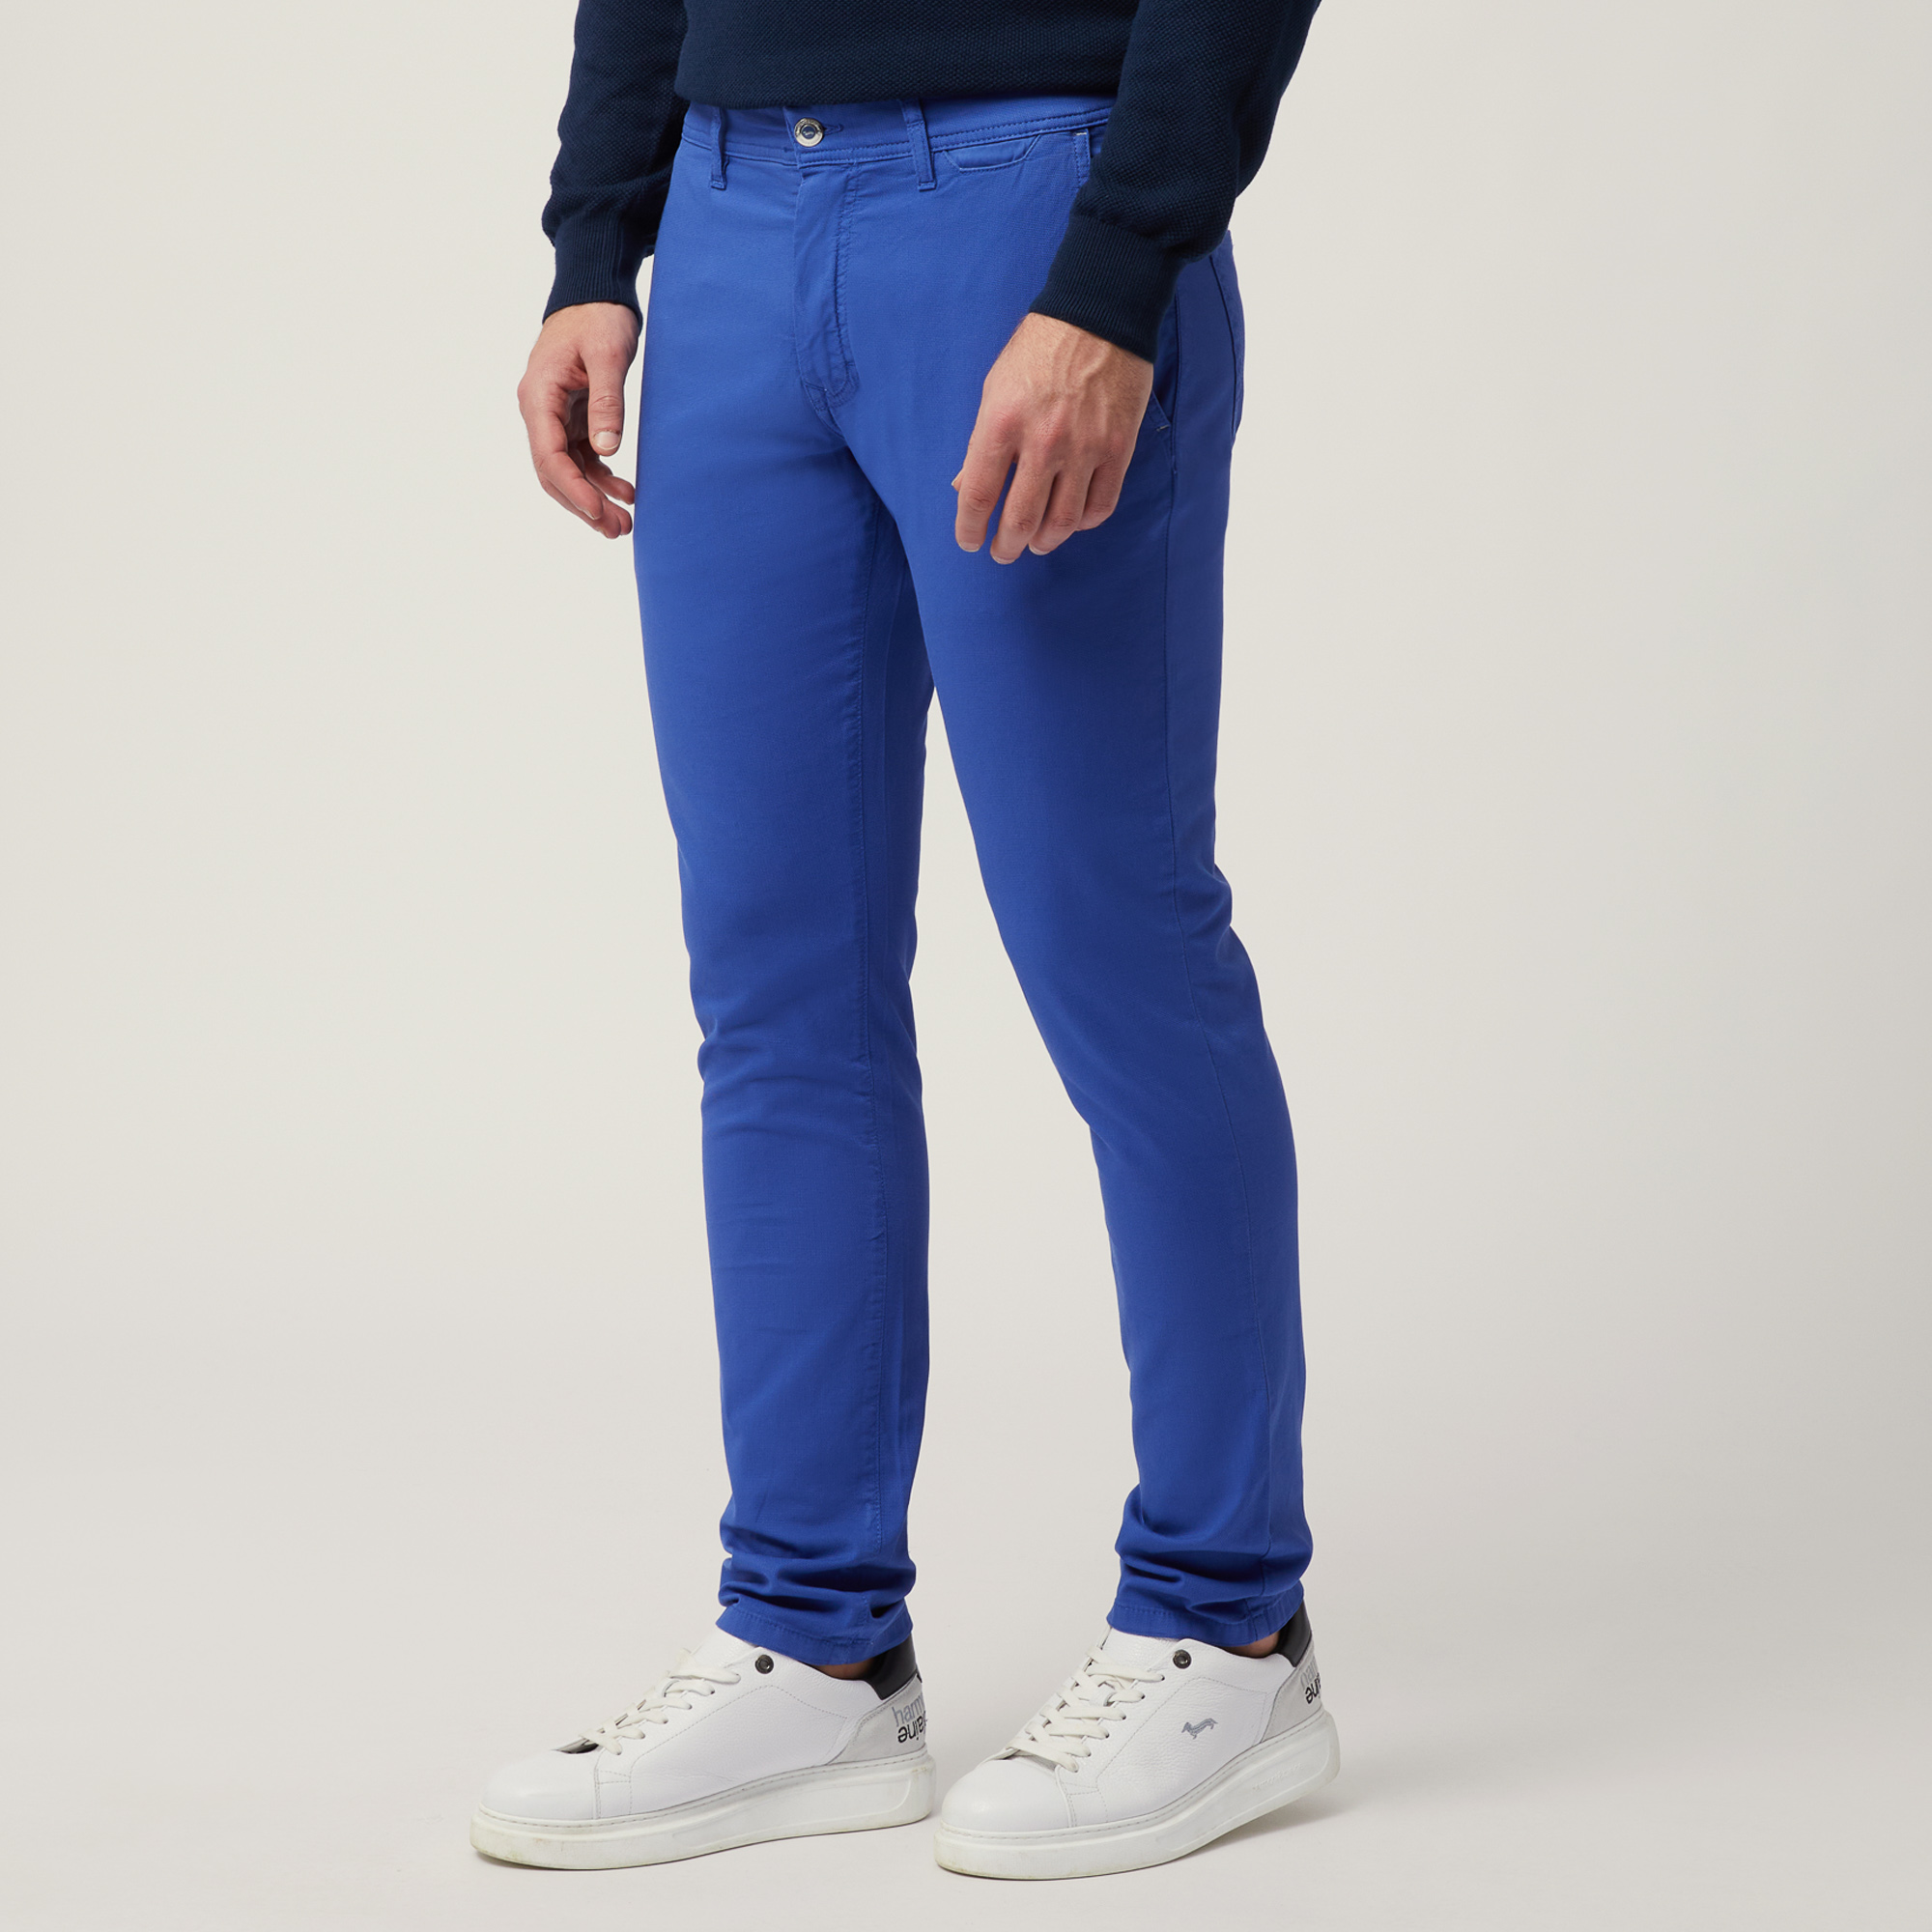 Pantaloni Colorfive, Ortensia, large